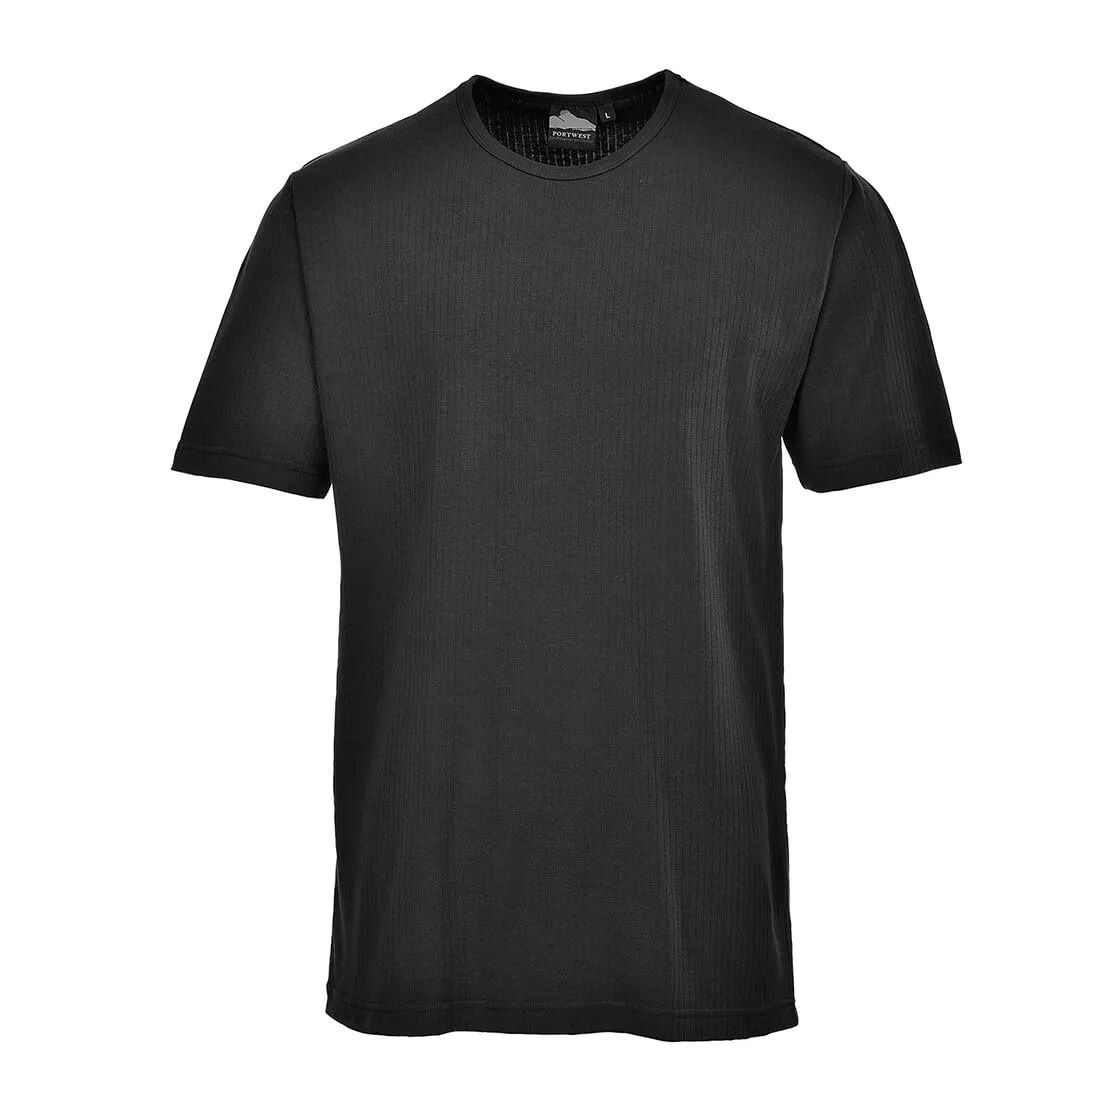 Portwest Thermal Short Sleeve T Shirt - Black, S